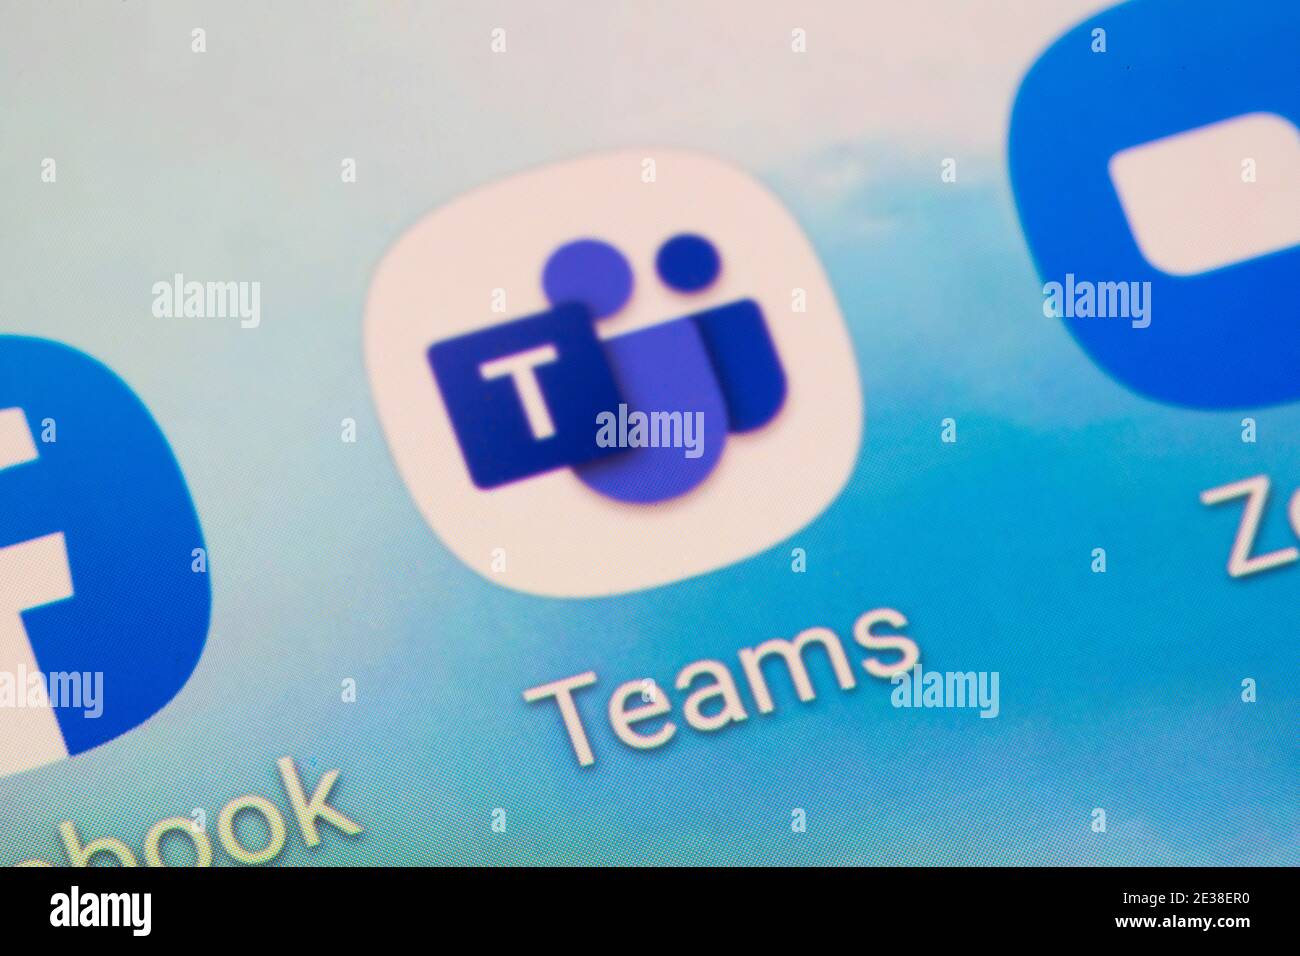 A closeup of the Microsoft Teams app logo on a smartphone. Microsoft Teams is a proprietary business communication platform developed by Microsoft Stock Photo